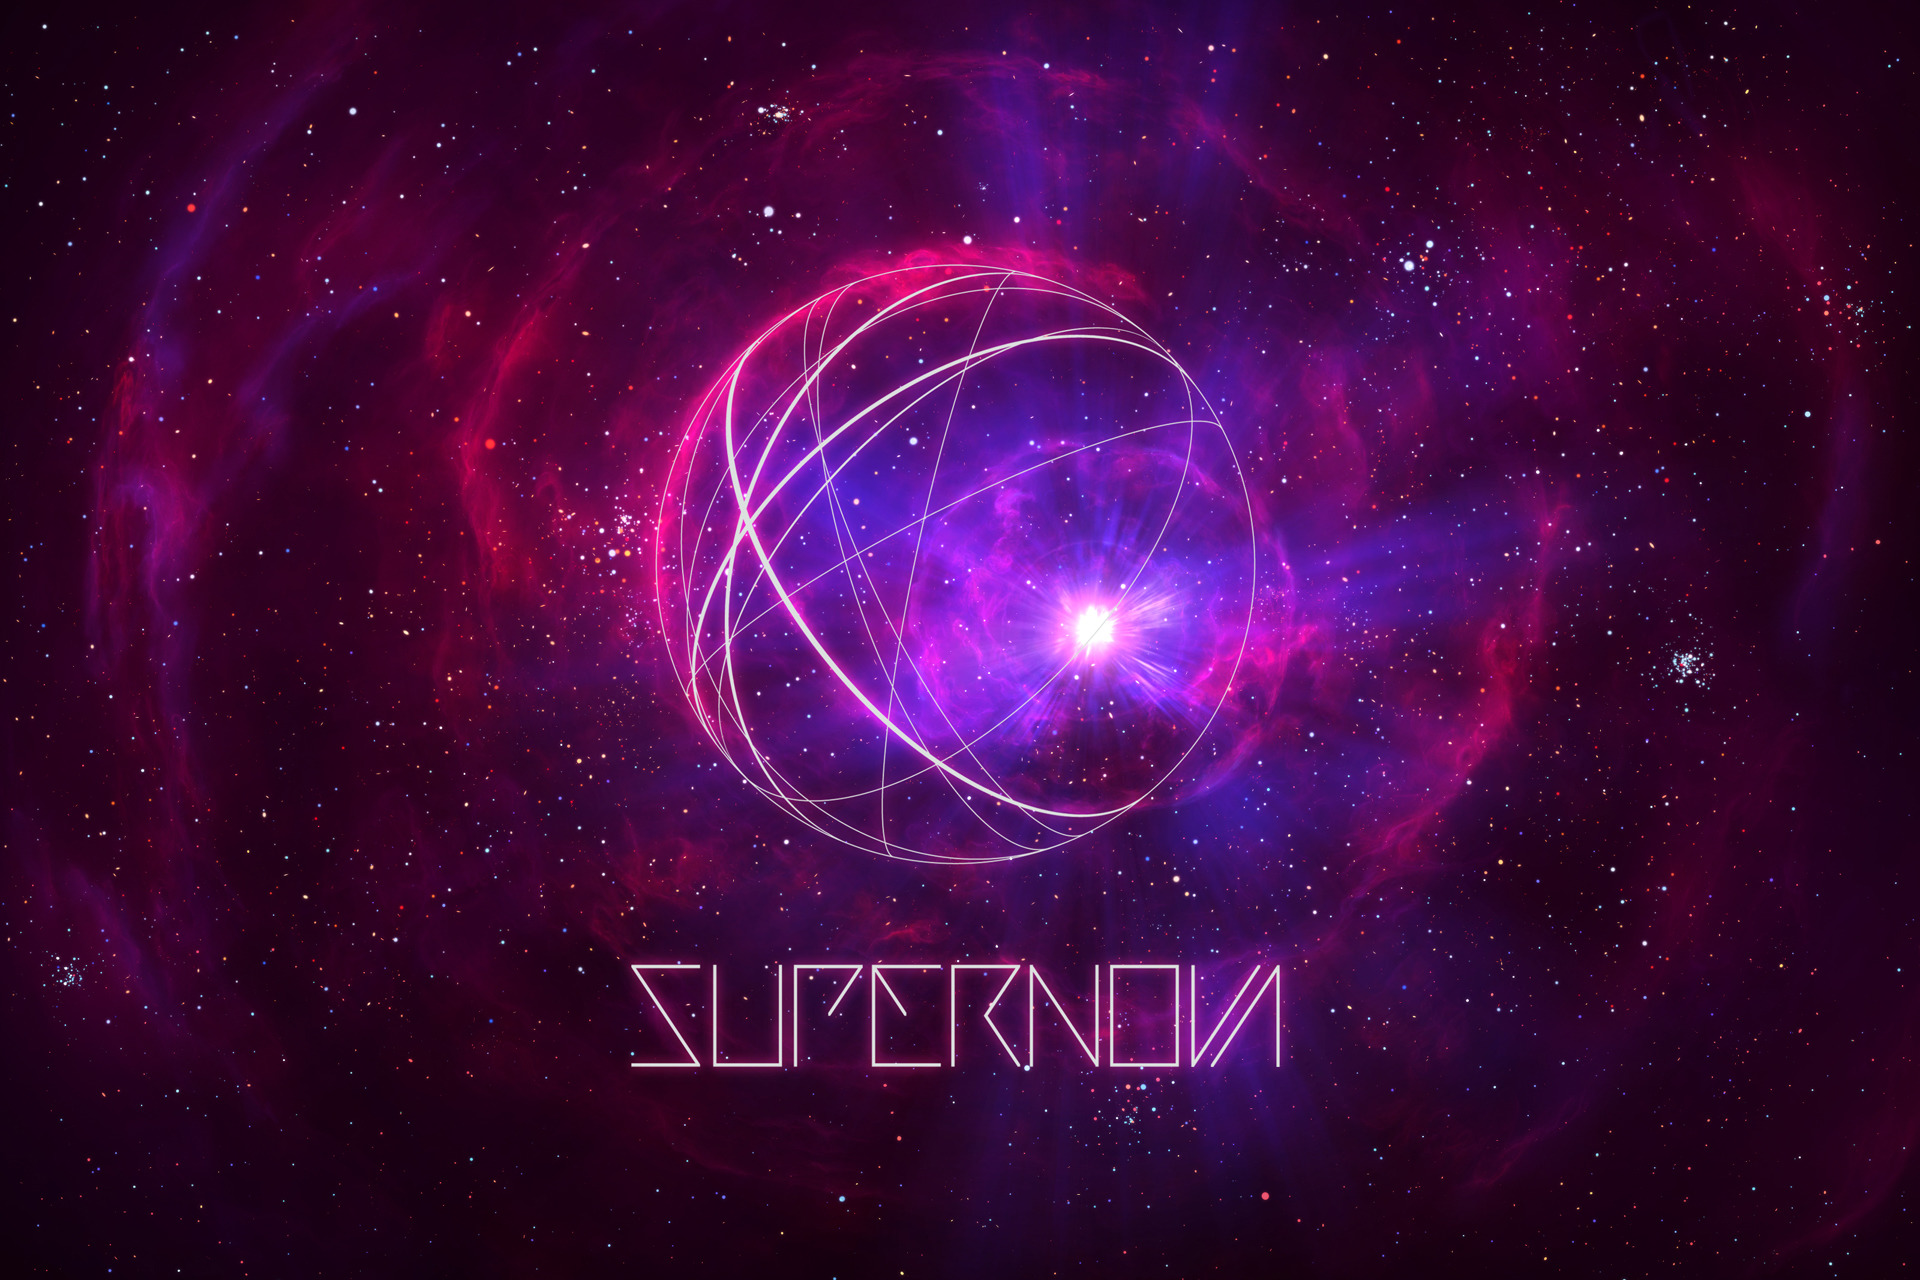 supernova, TylerCreatesWorlds, Space, Typography, Space Art, Nebula, Streaks, Artwork, Abstract, Explosion, Stars Wallpaper